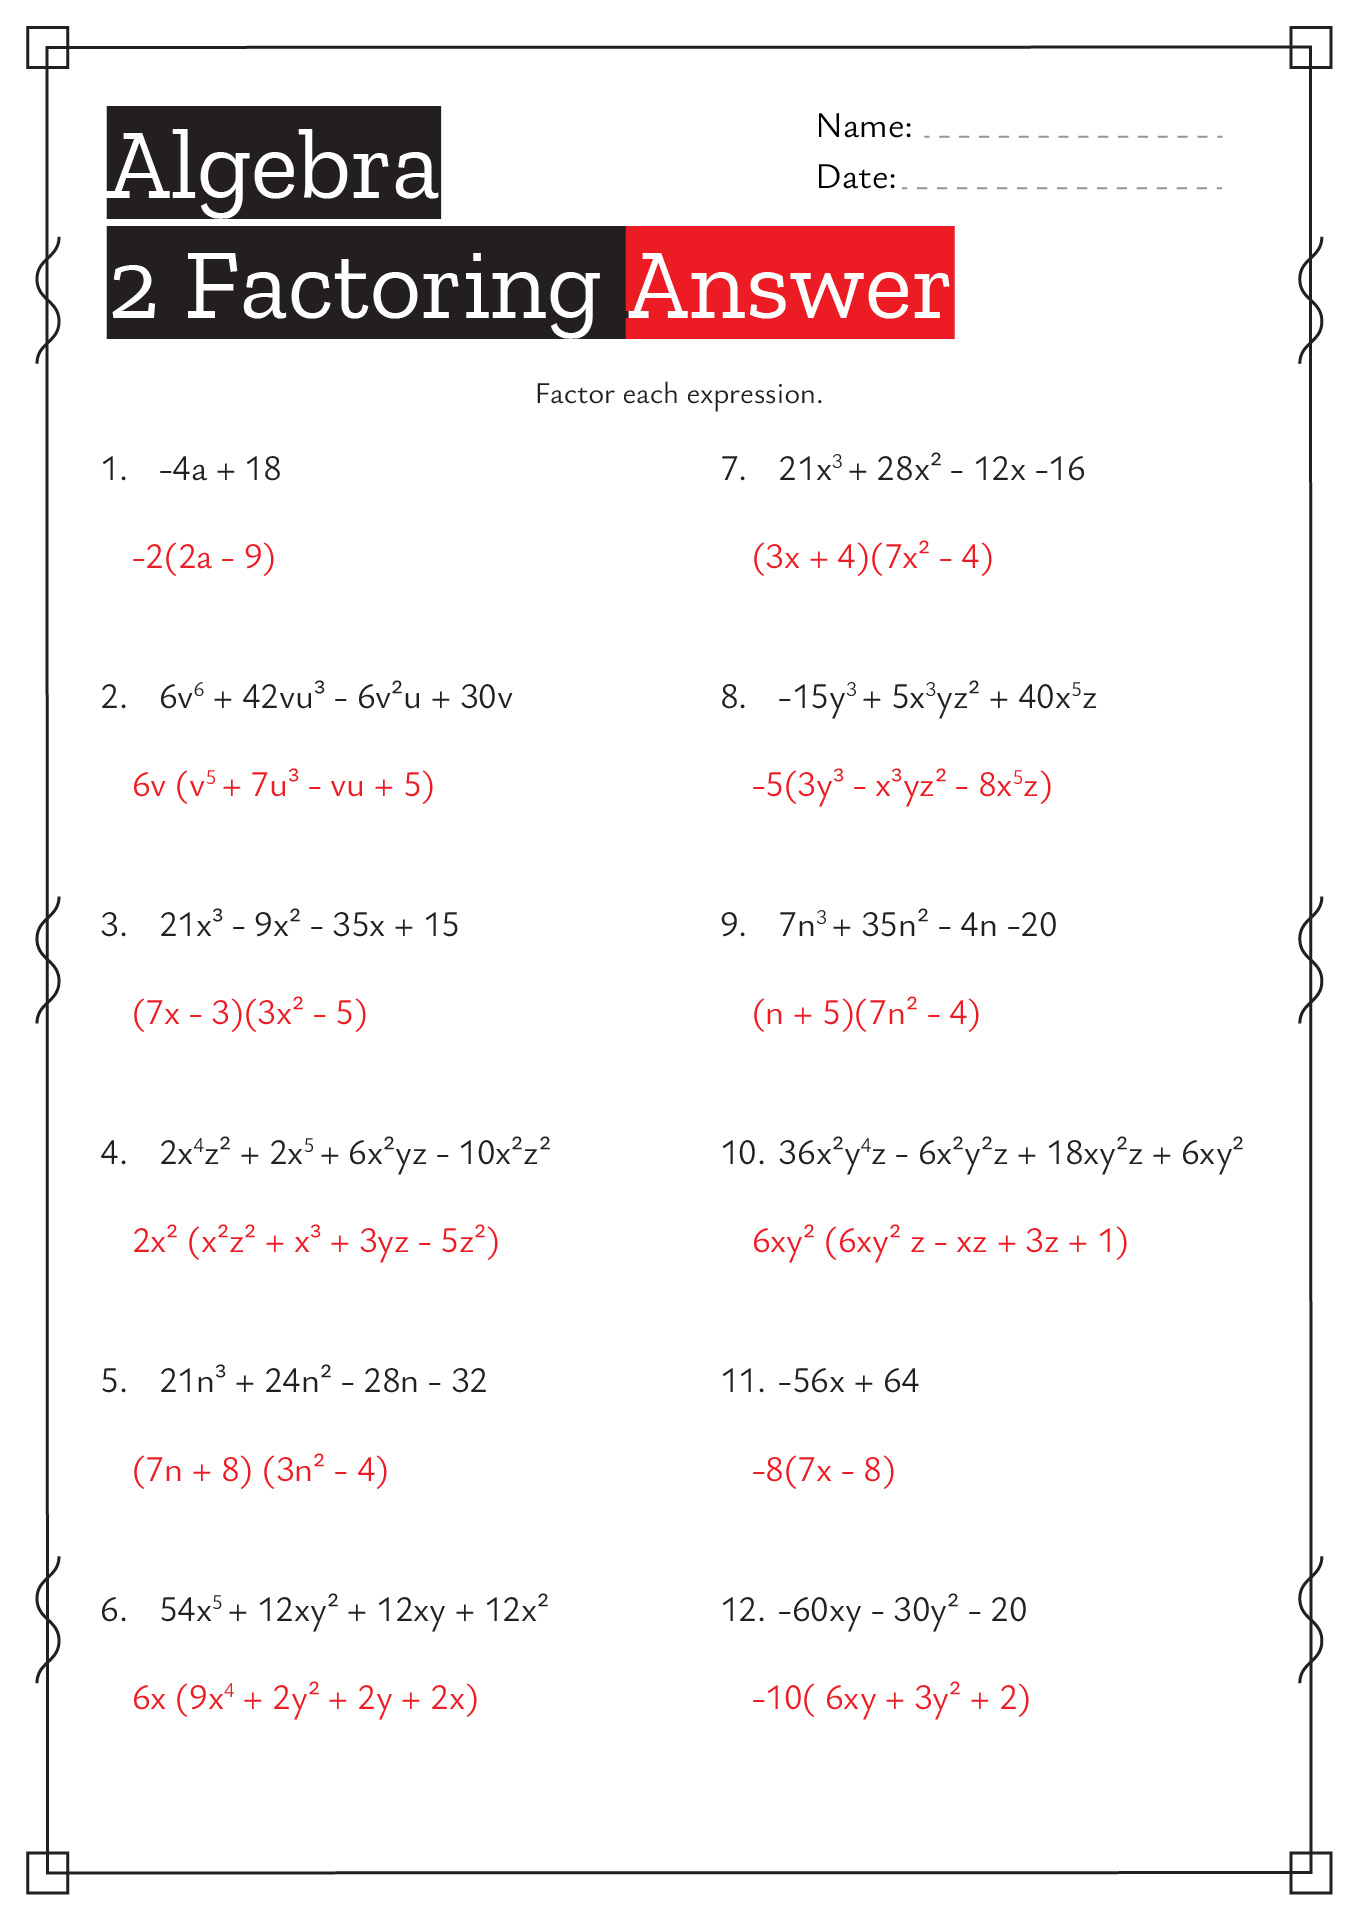 Algebra 2 Factoring Review Worksheet Answers